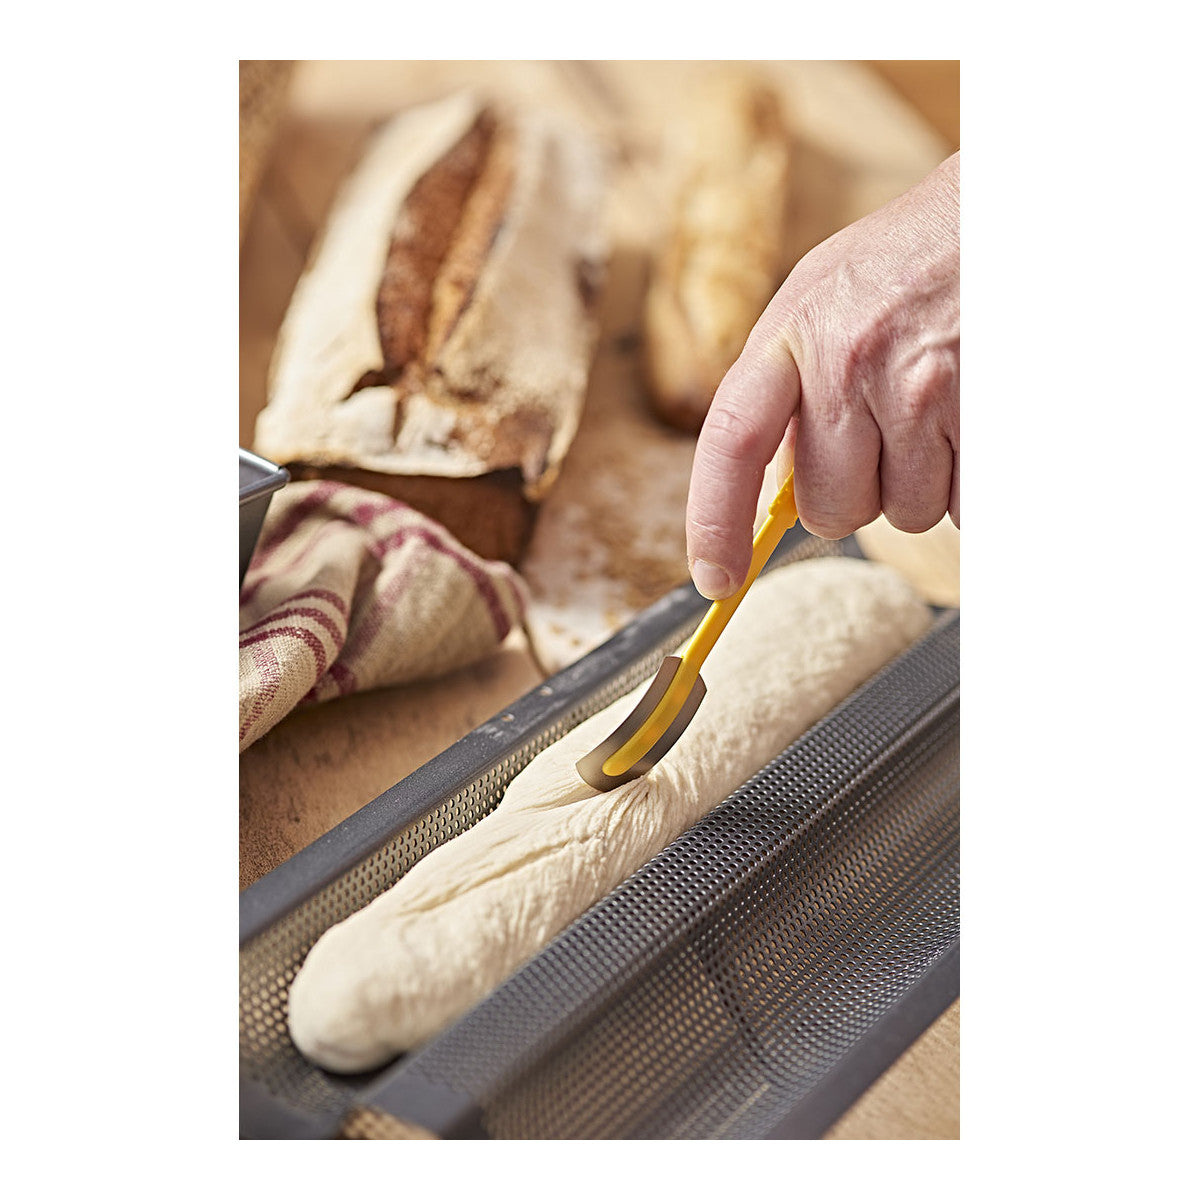 Baker's blade, curved